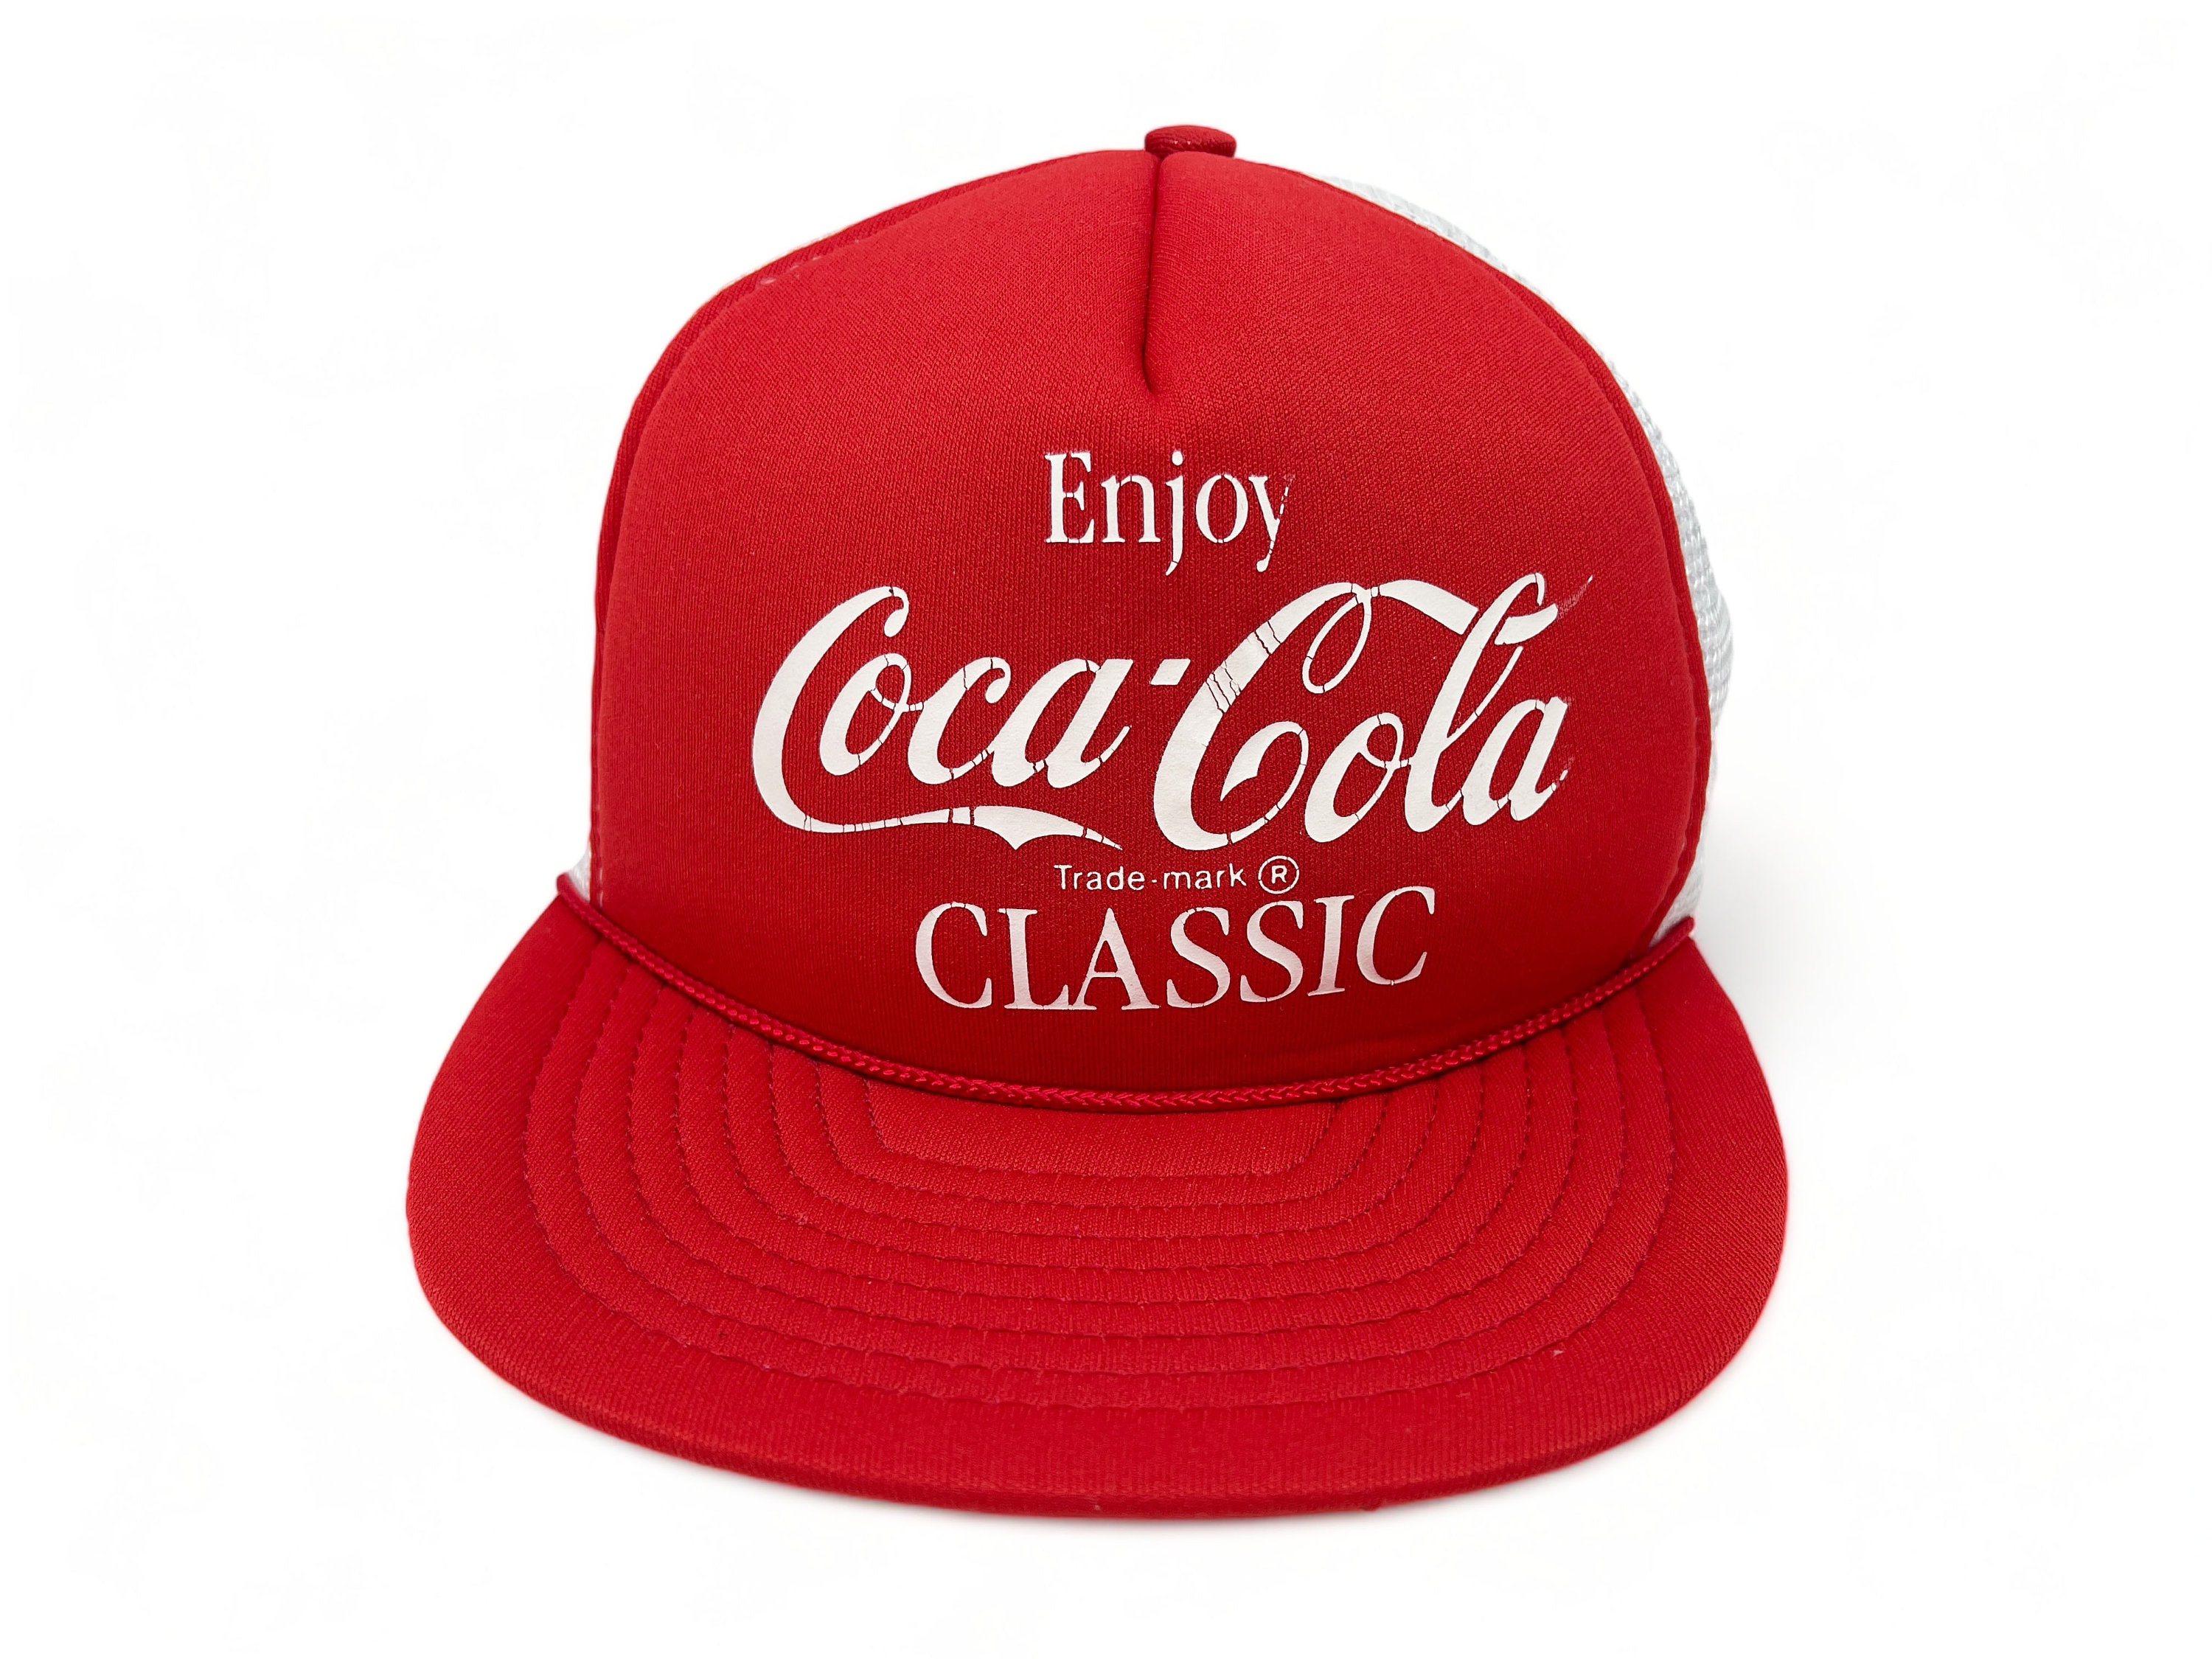 90's Enjoy Coca-Cola Orange Blaze Camo Snap Back Trucker Hat Men's OSFM!